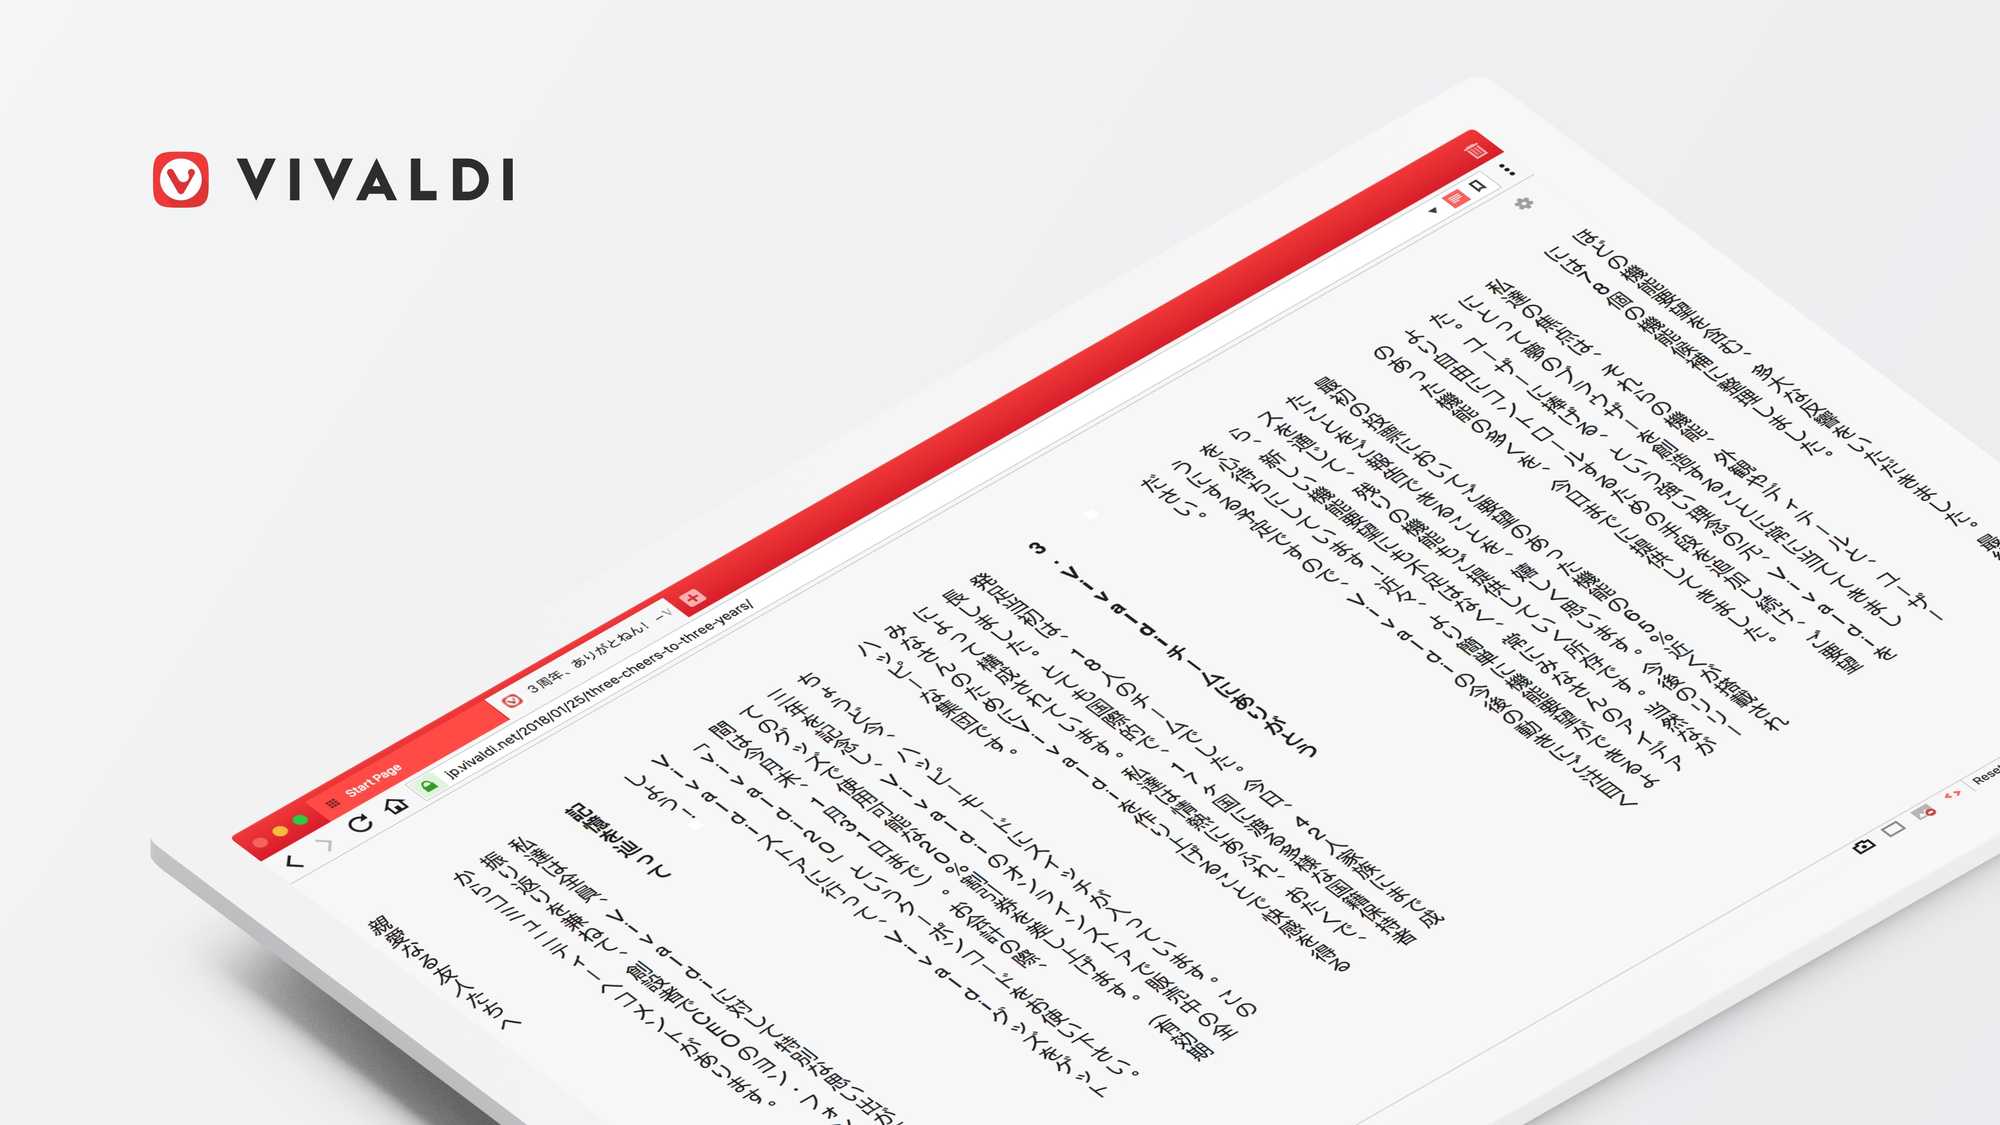 Vivaldi-Browser mit Jubiläumsversion 1.14